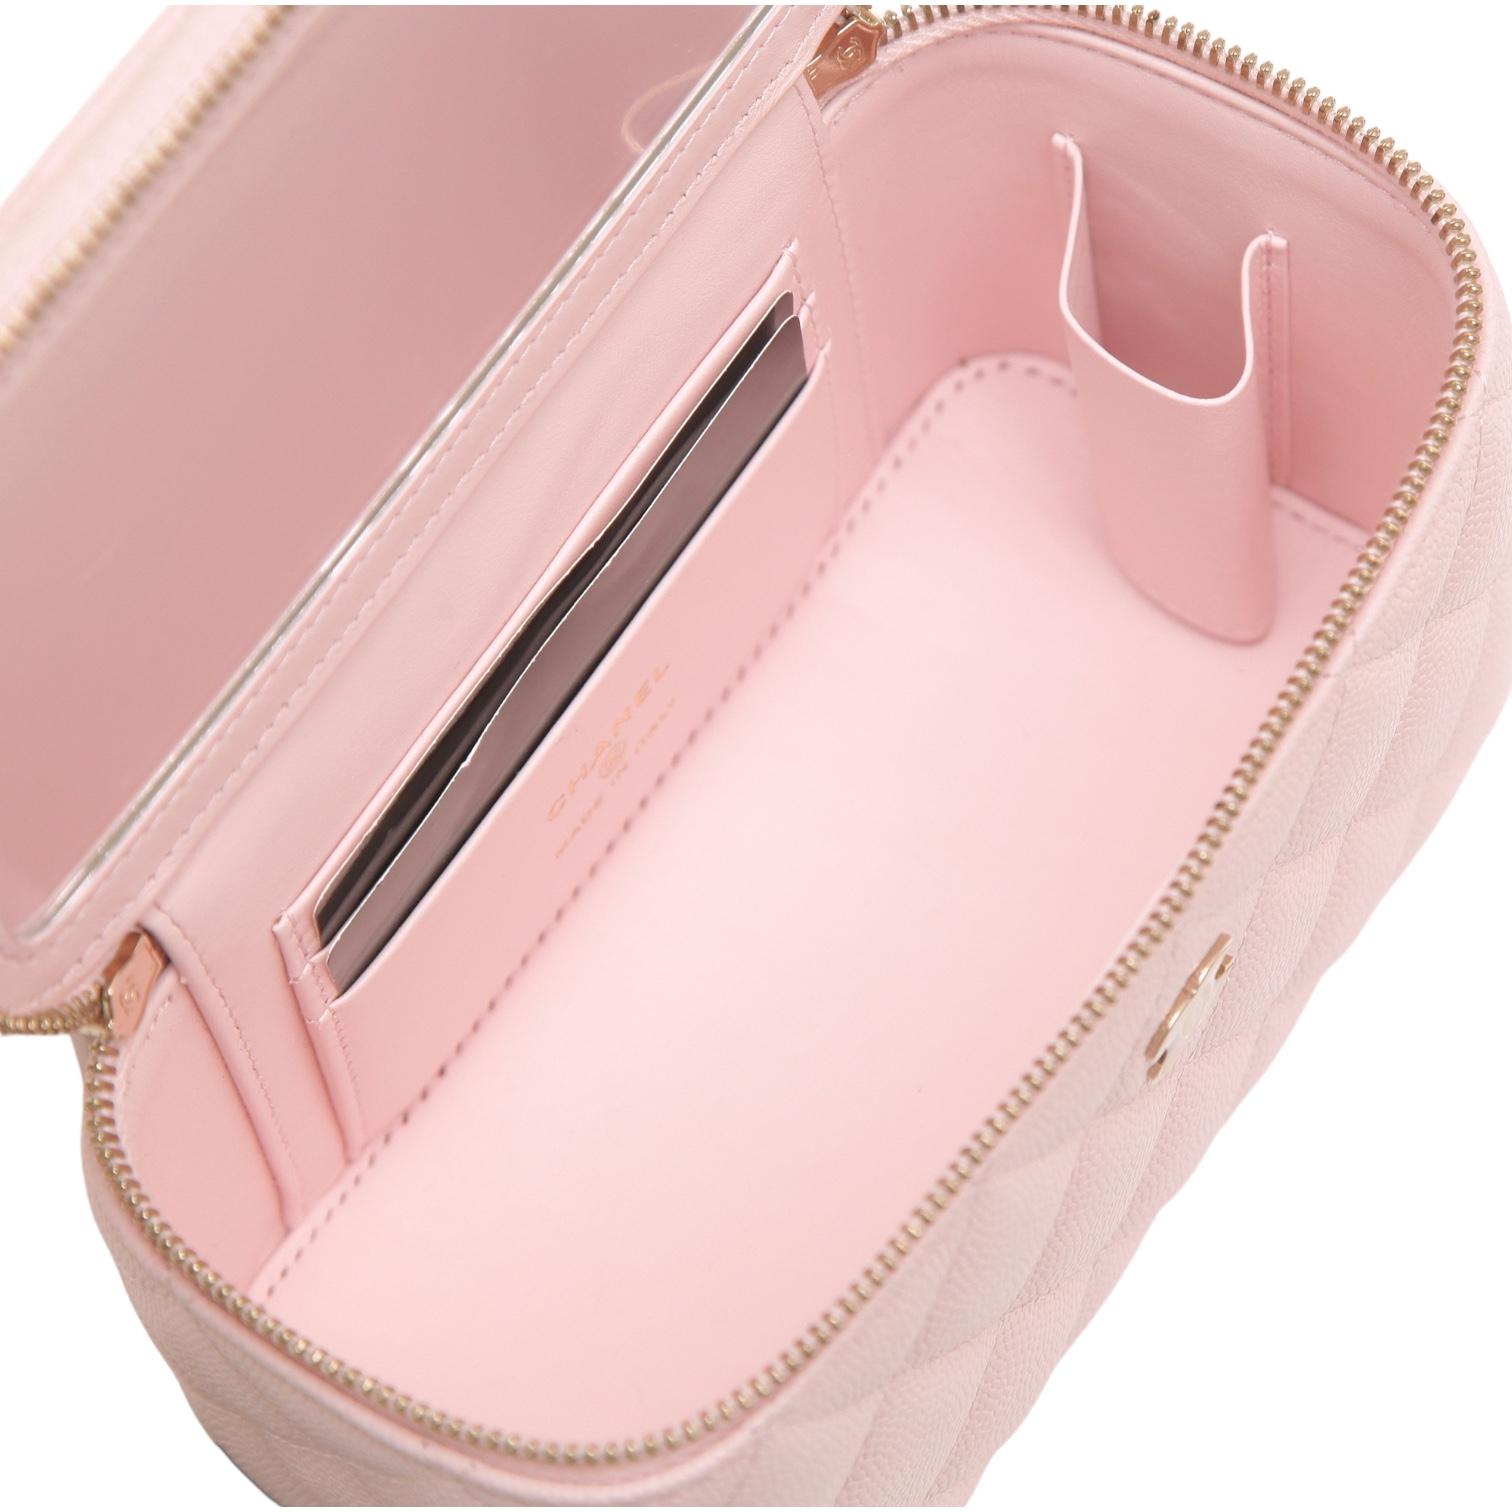  CHANEL Pink Caviar Leather Vanity Bag Case Crossbody Gold HW Light 22S - Video  4